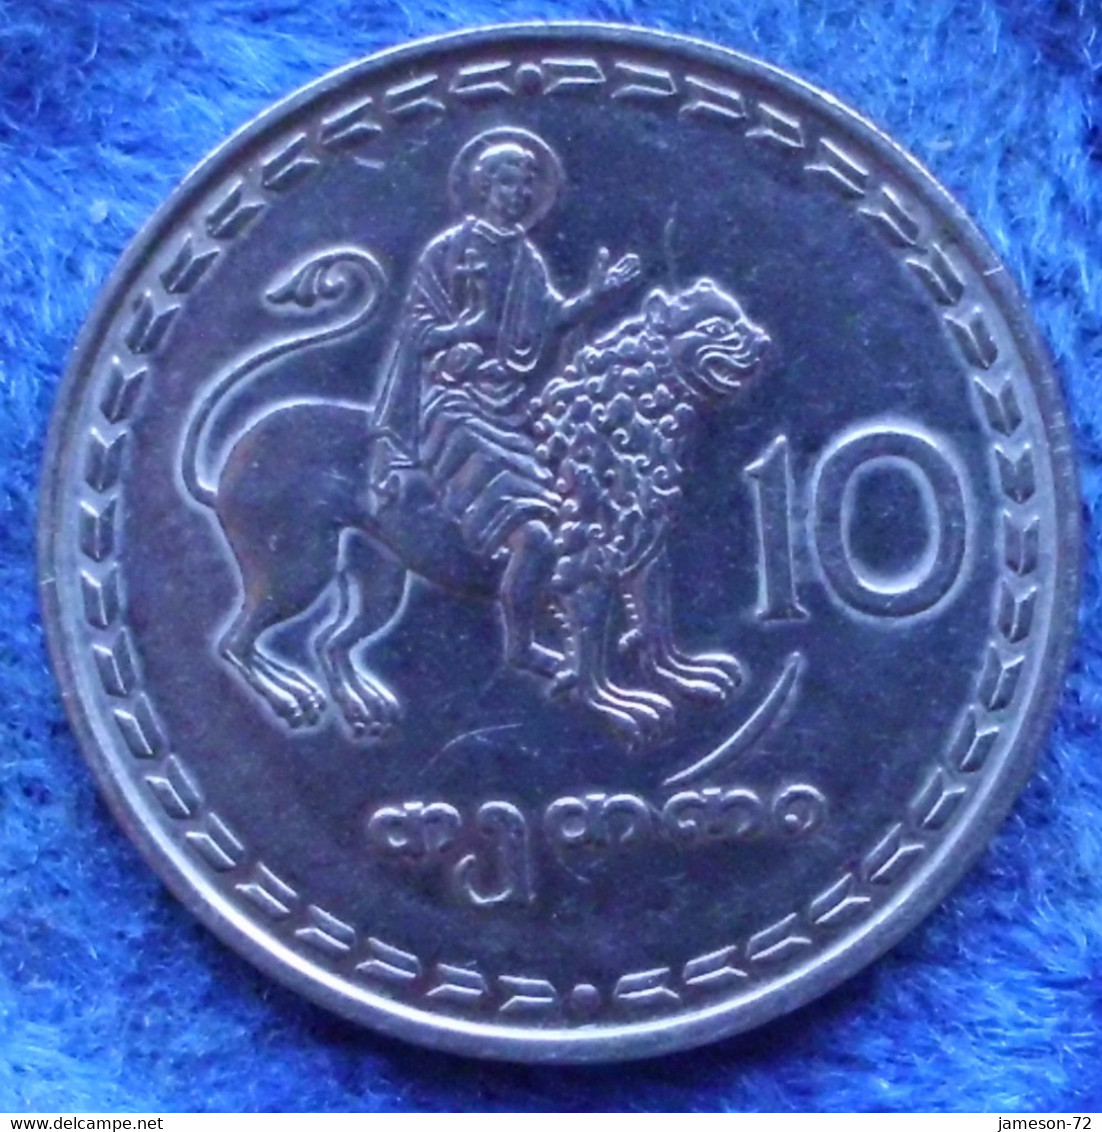 GEORGIA - 10 Thetri 1993 St Mamas KM# 79 Independent Republic Since 1991 - Edelweiss Coins - Georgia